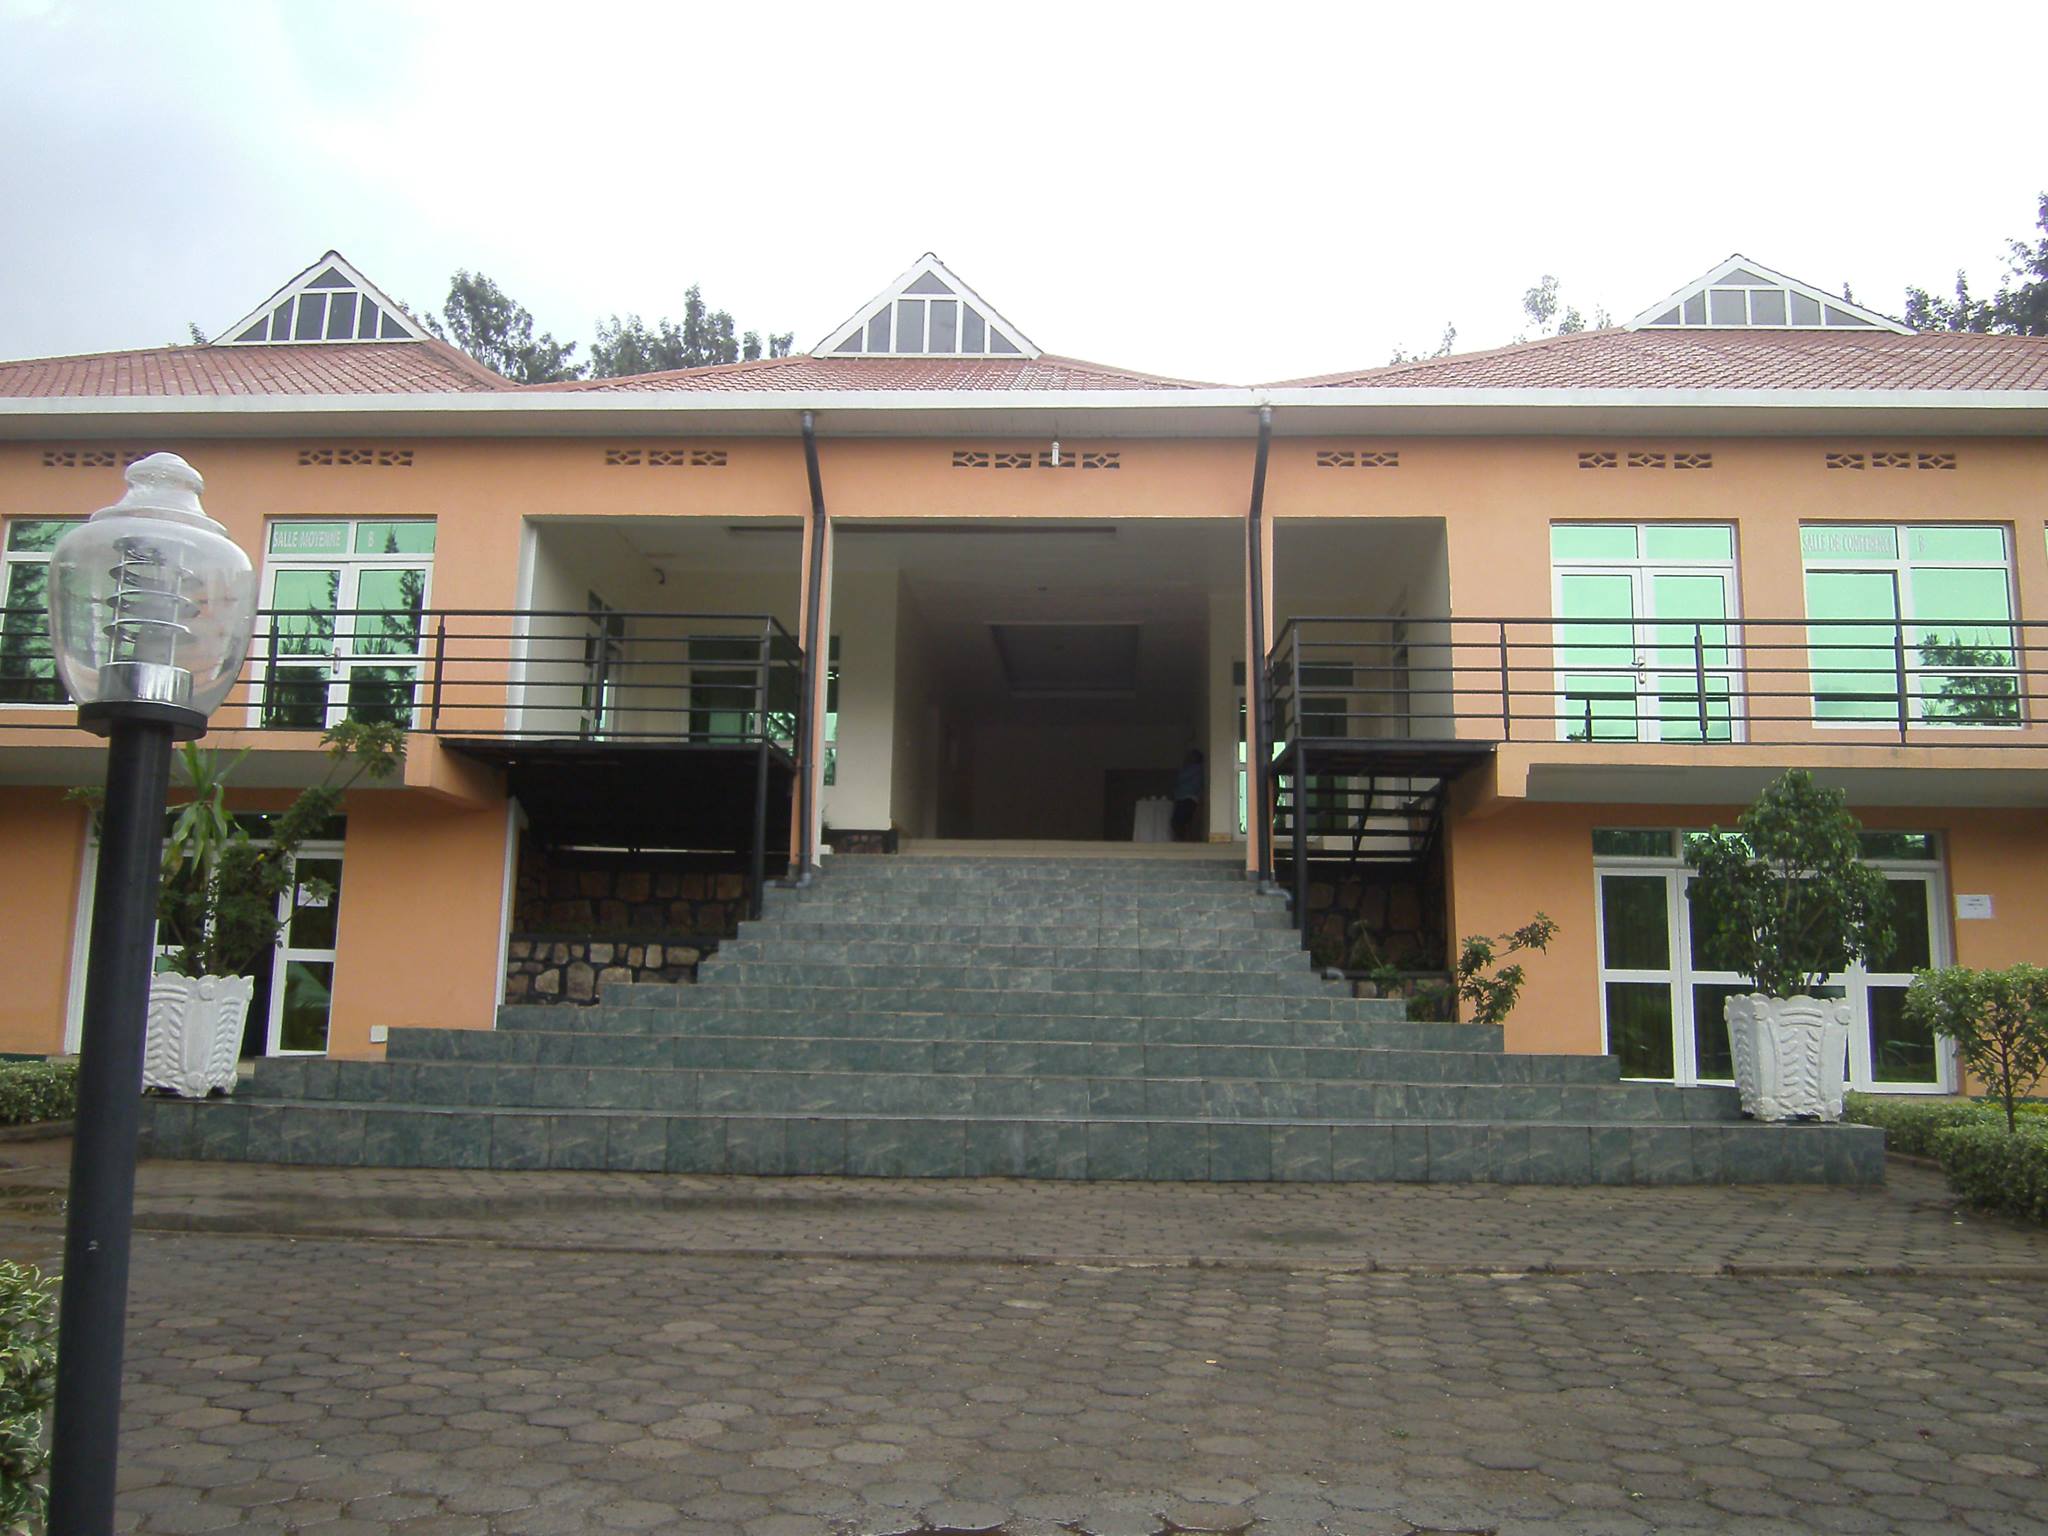 La Palisse Hotel, Kigali | Neza SAFARIS 